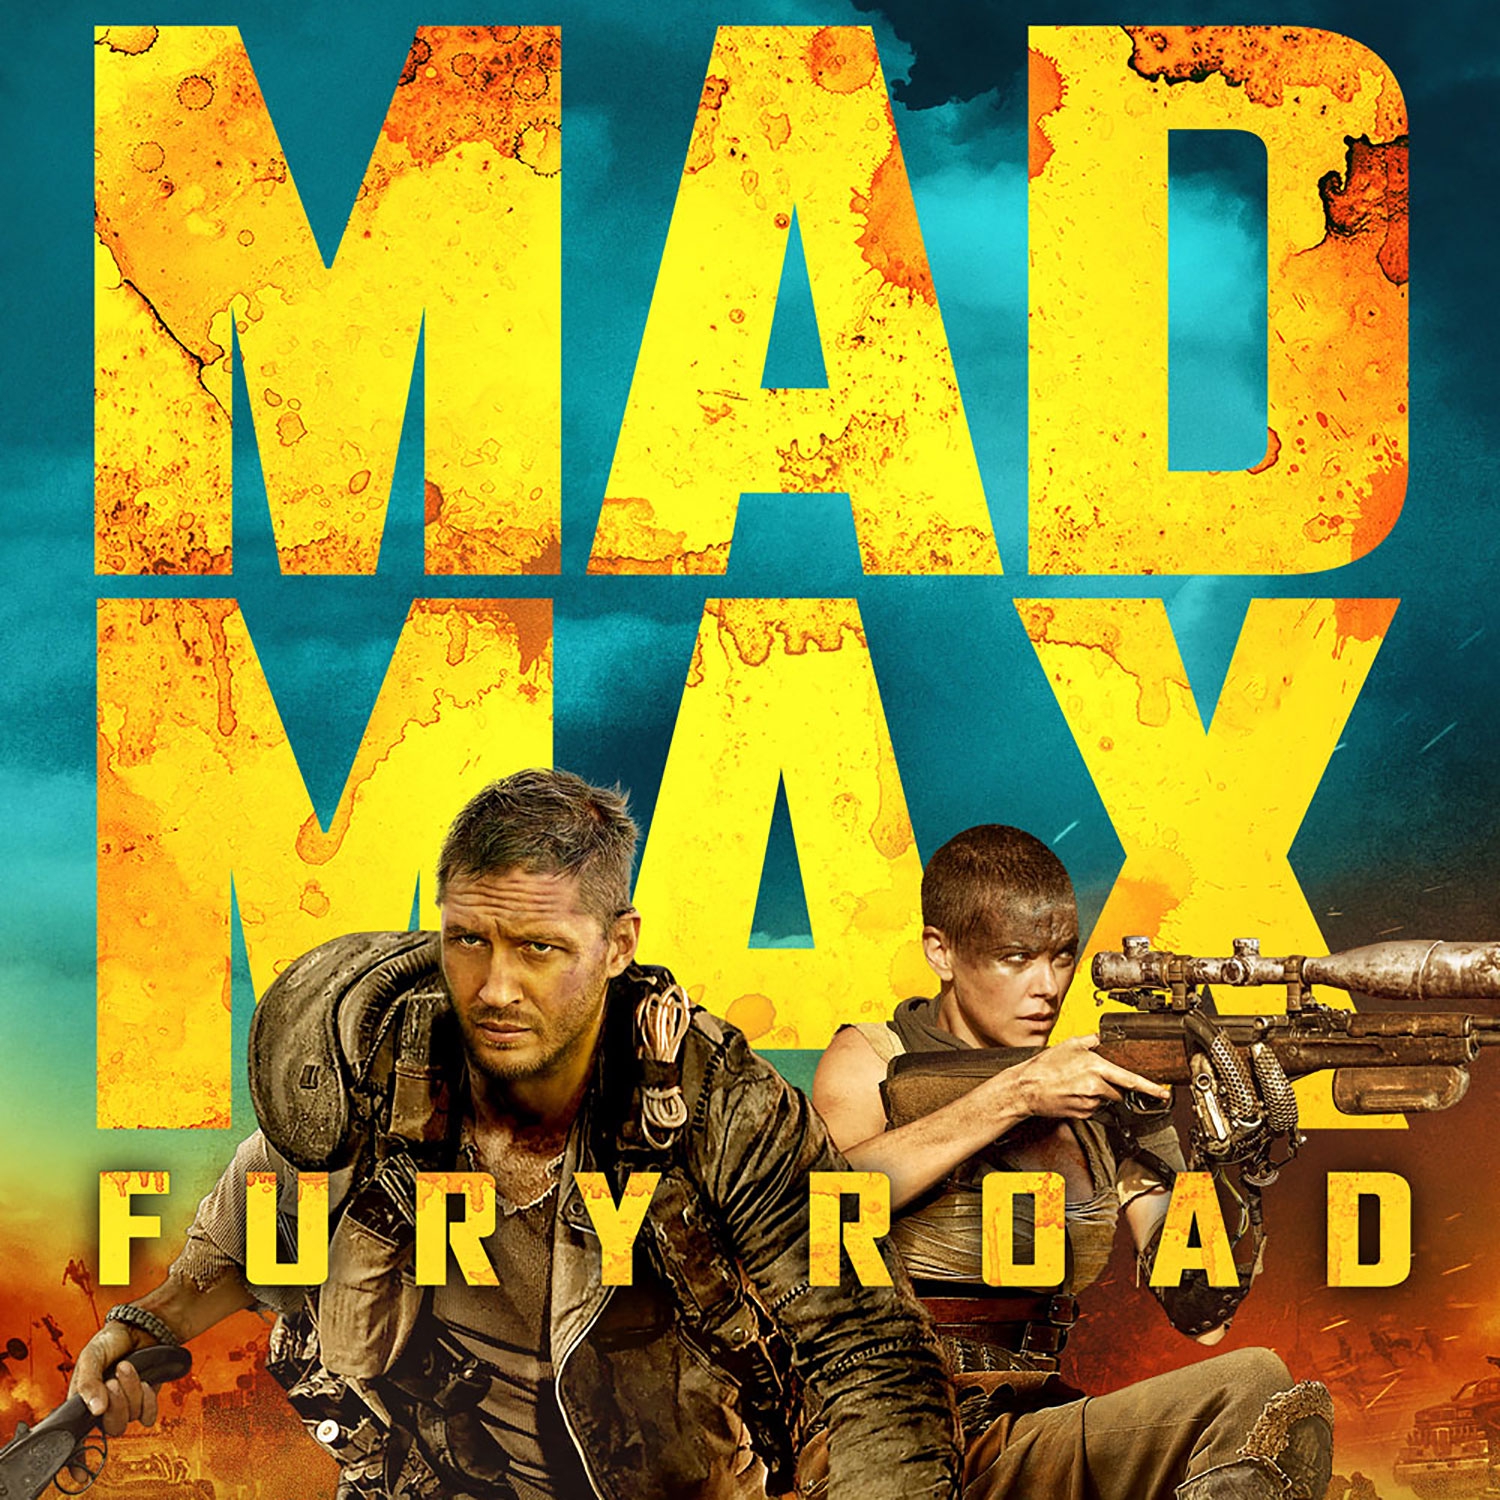 mad max fury road free watch